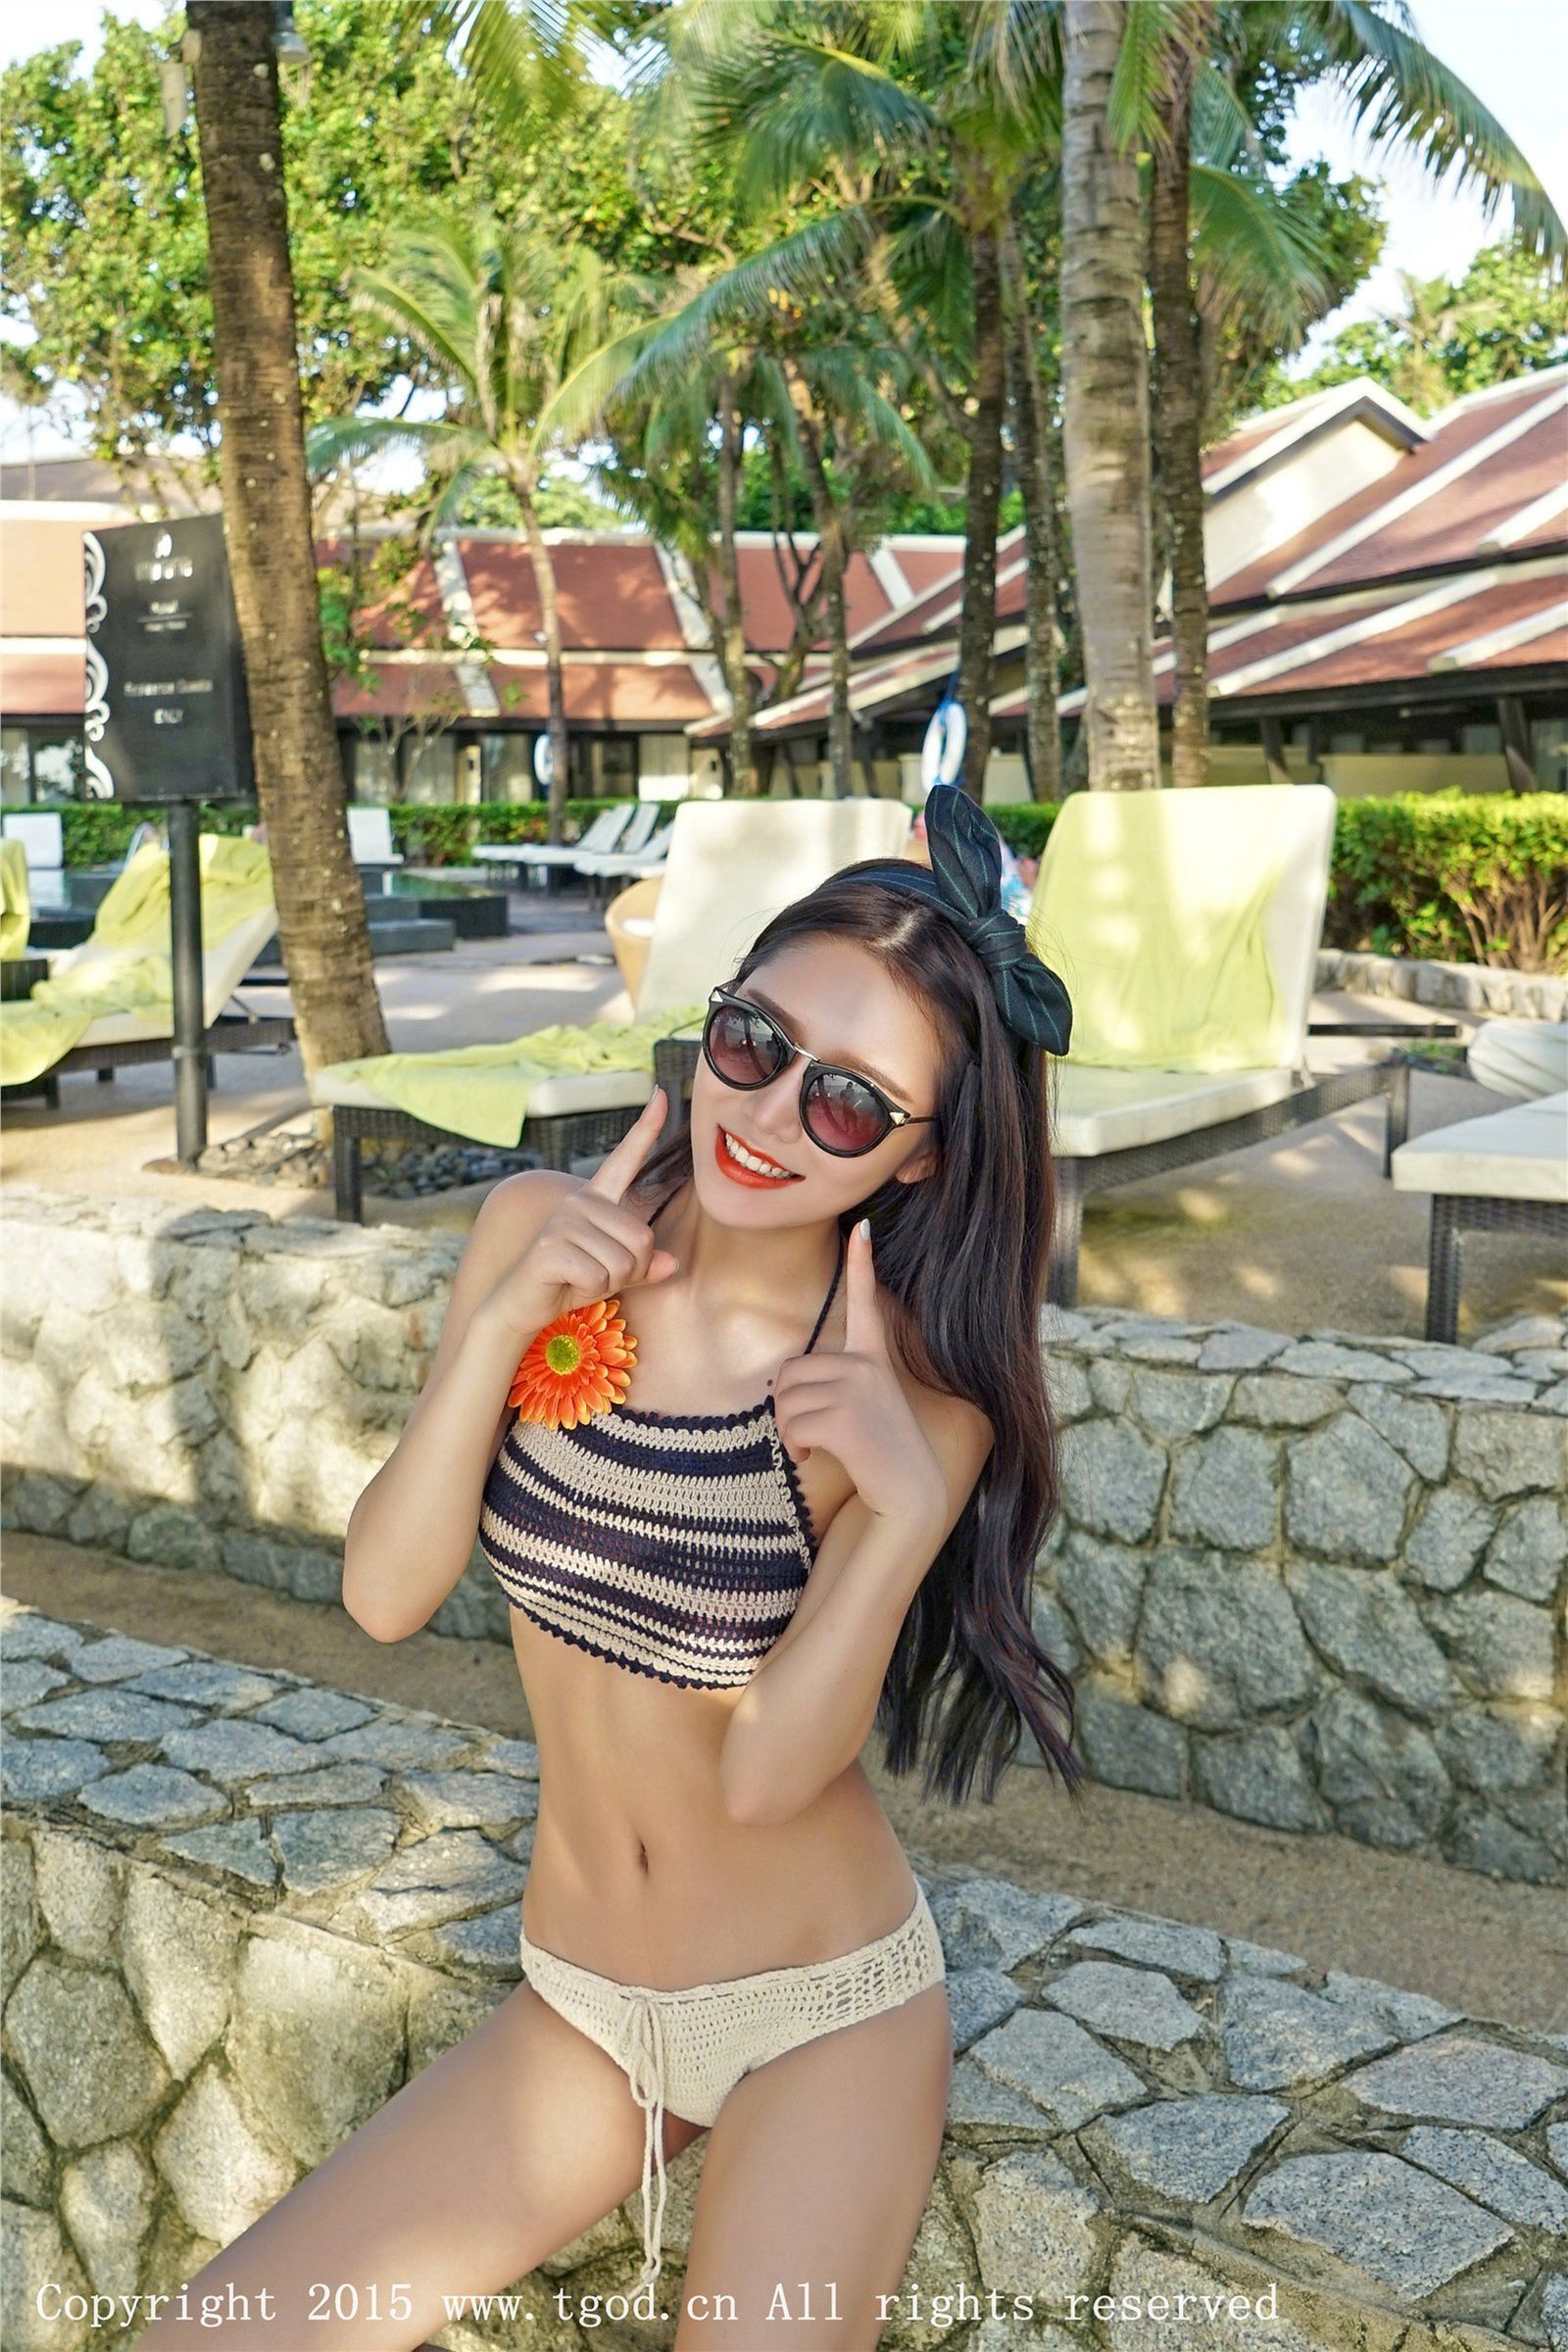 [tgod push goddess] 2015.11.25 Phuket Travel Photography fifth issue Xu Yanxin Mandy